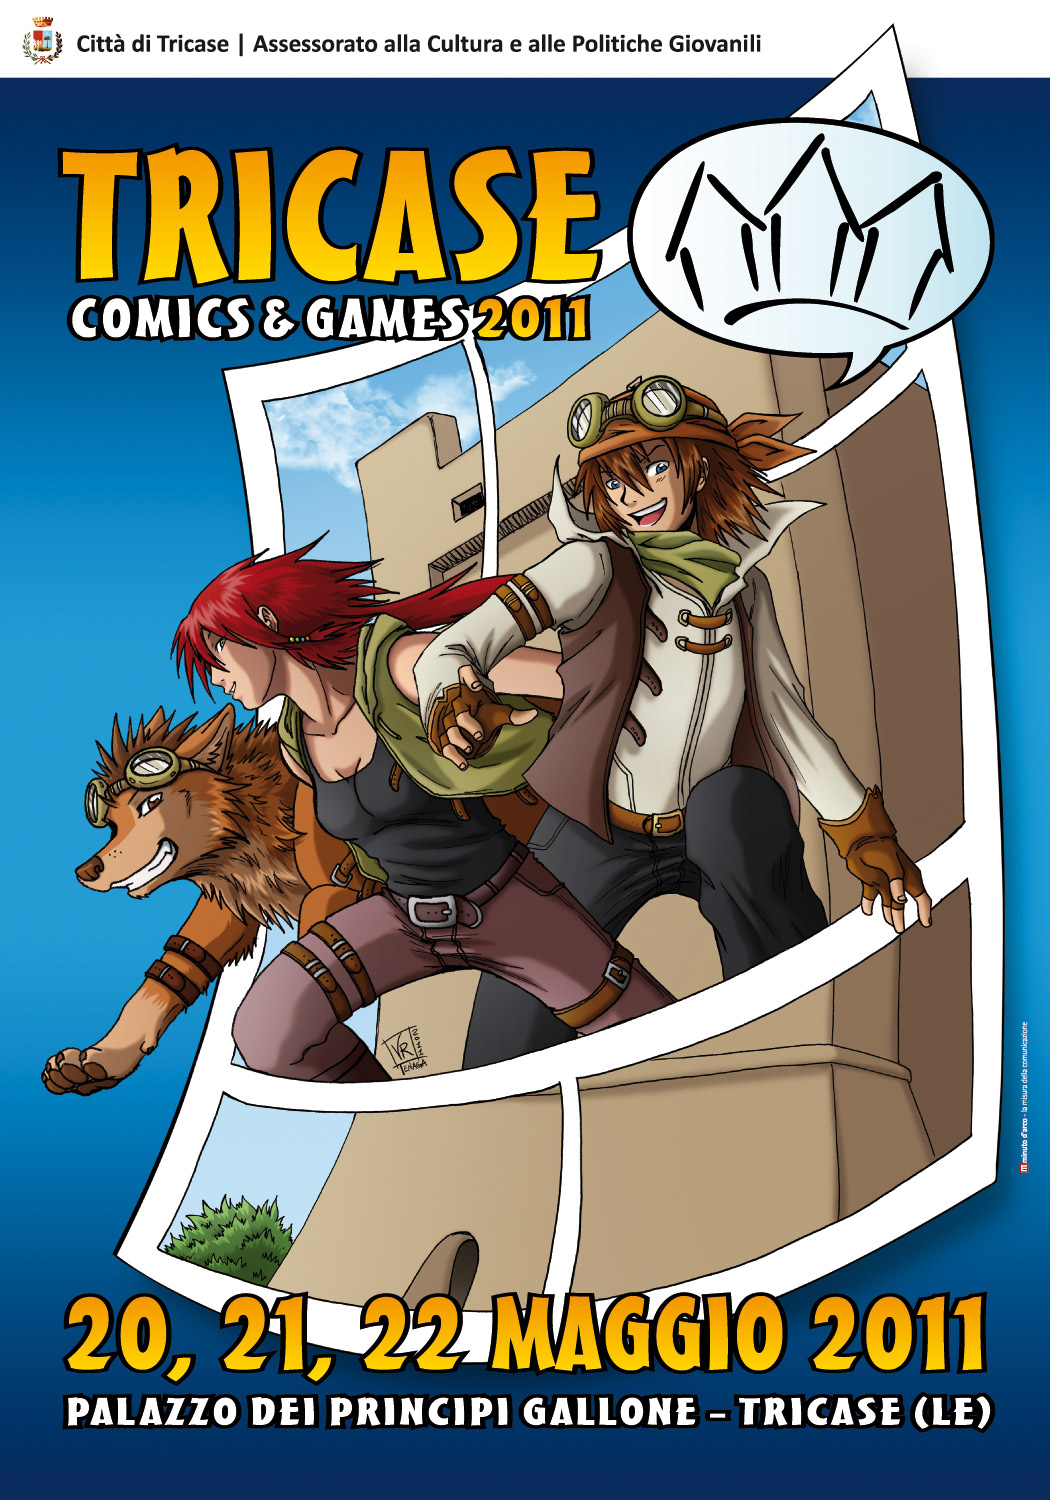 Locandina Tricase comics&games 2011 by Tenaga